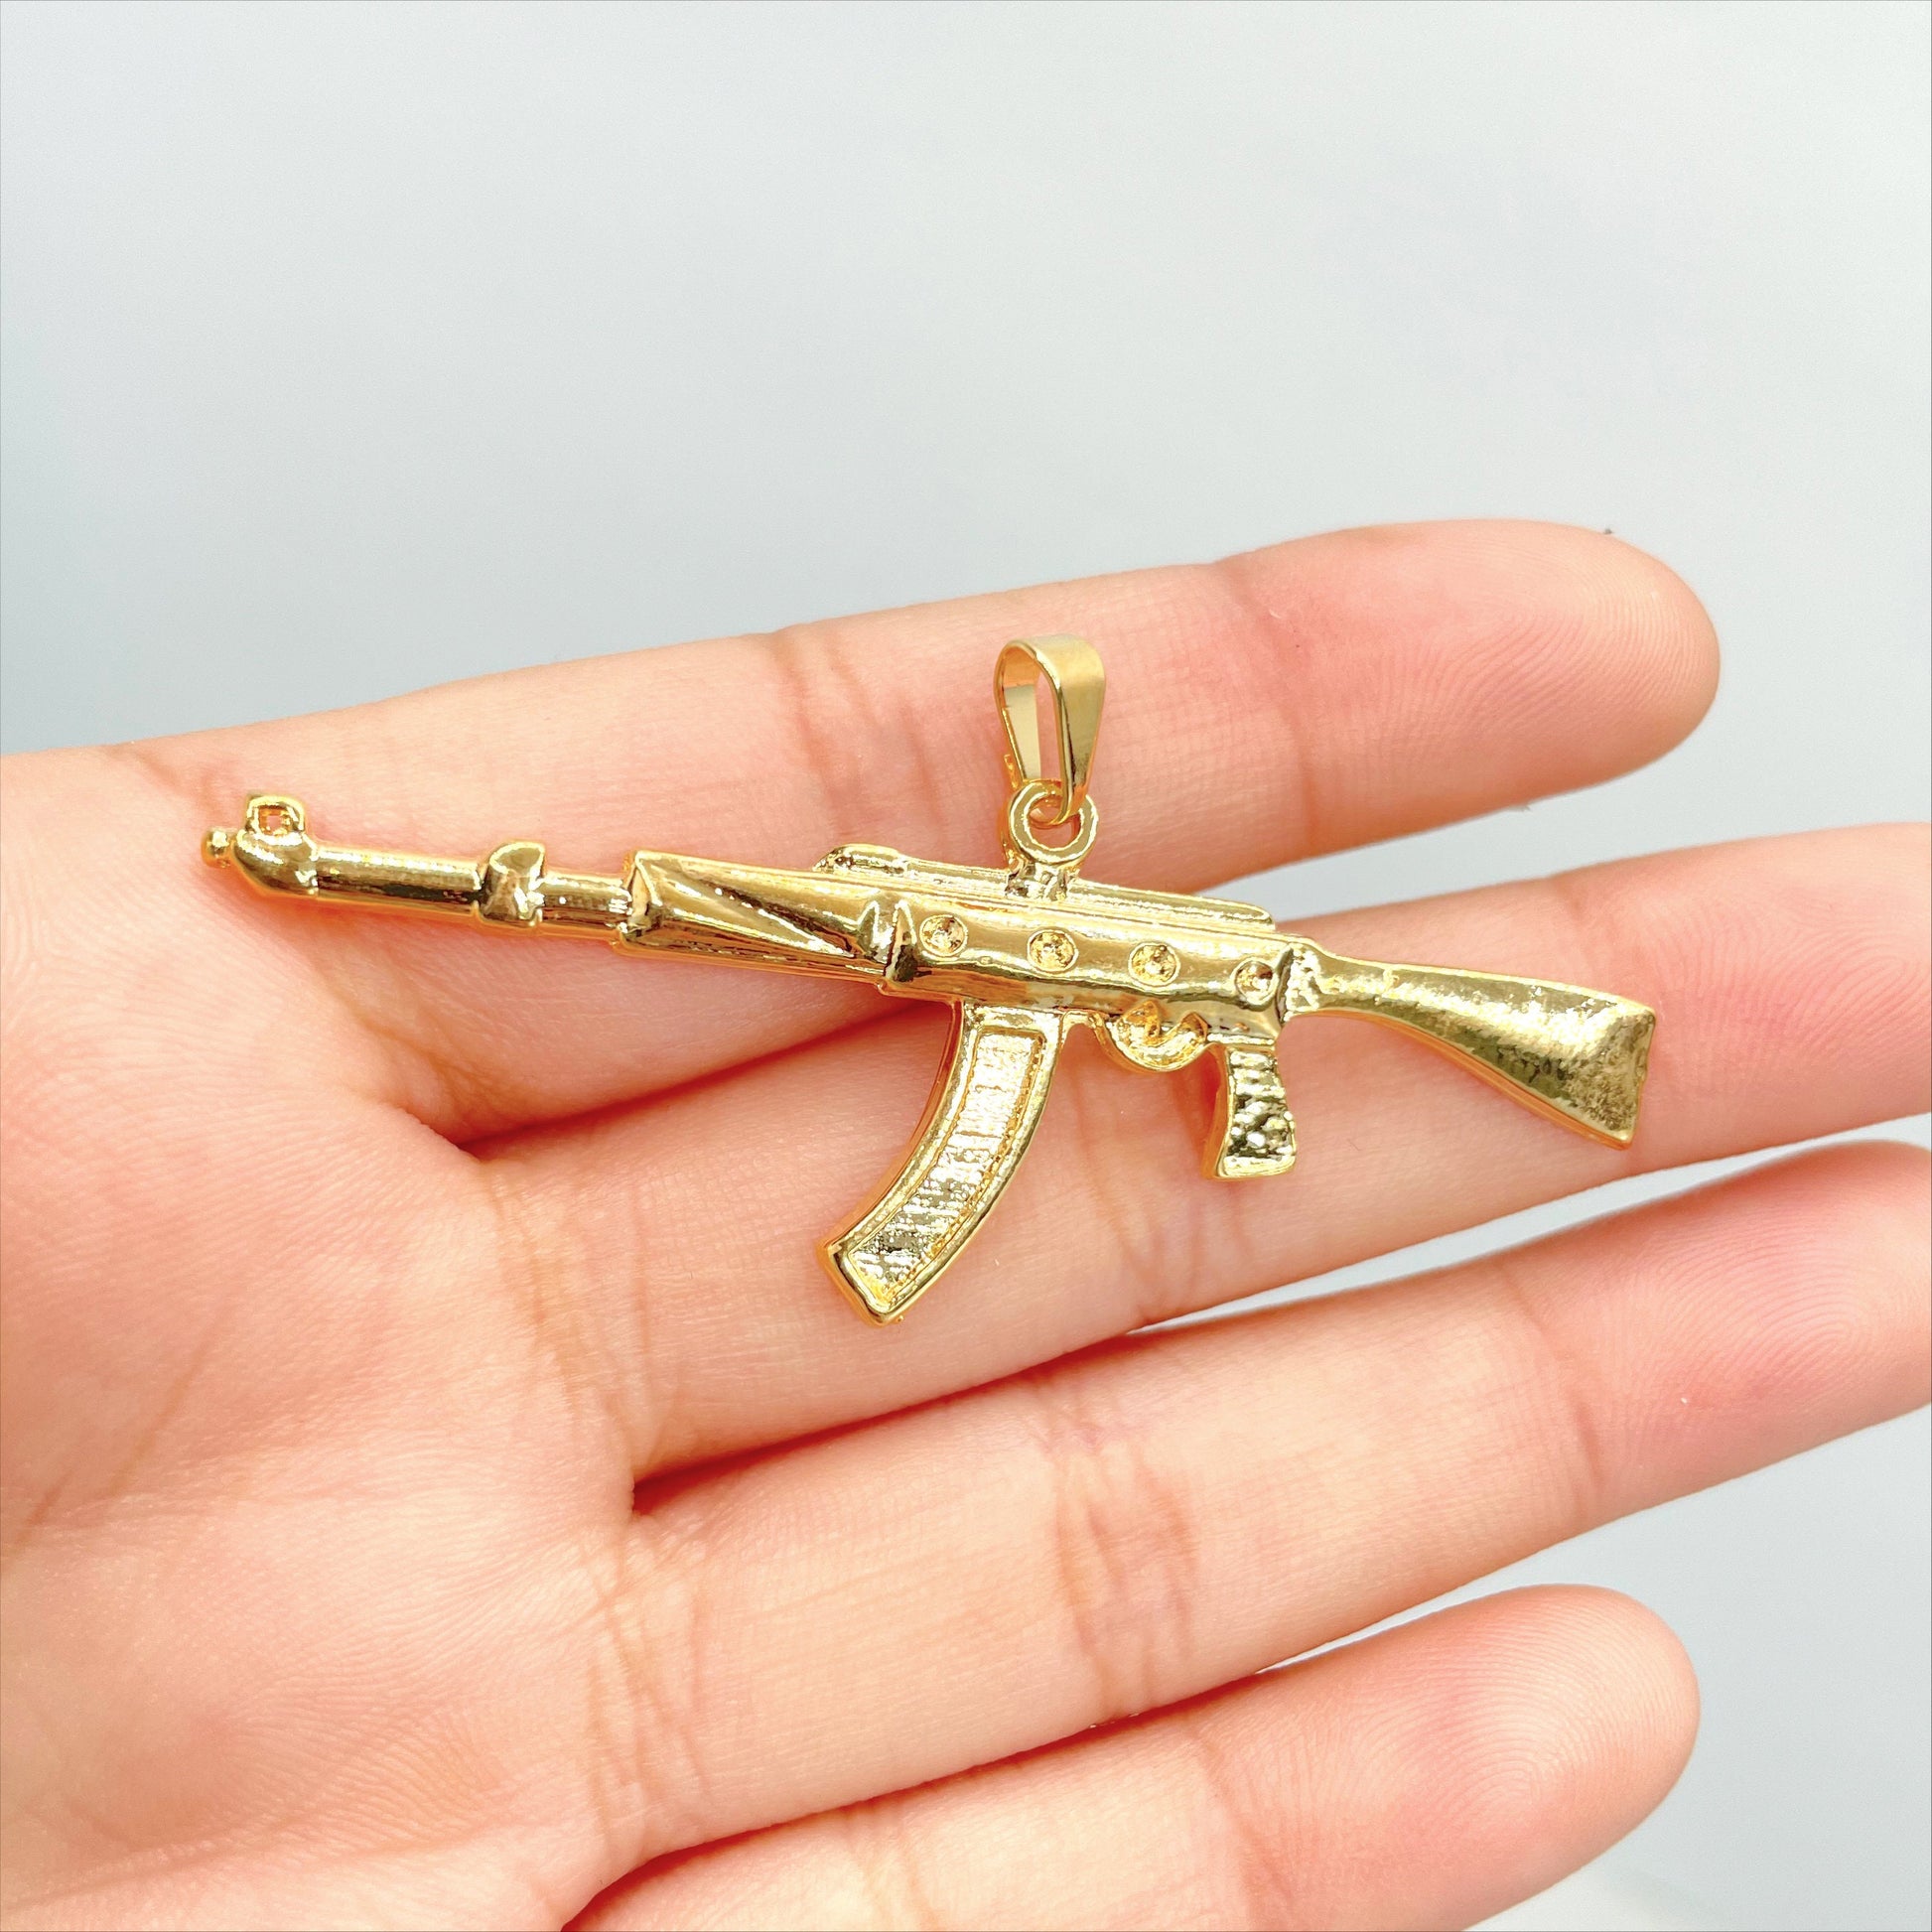 18k Gold Filled Machine Gun Rifle Pendant Charms, Men's Jewelry, Wholesale Jewelry Making Supplies